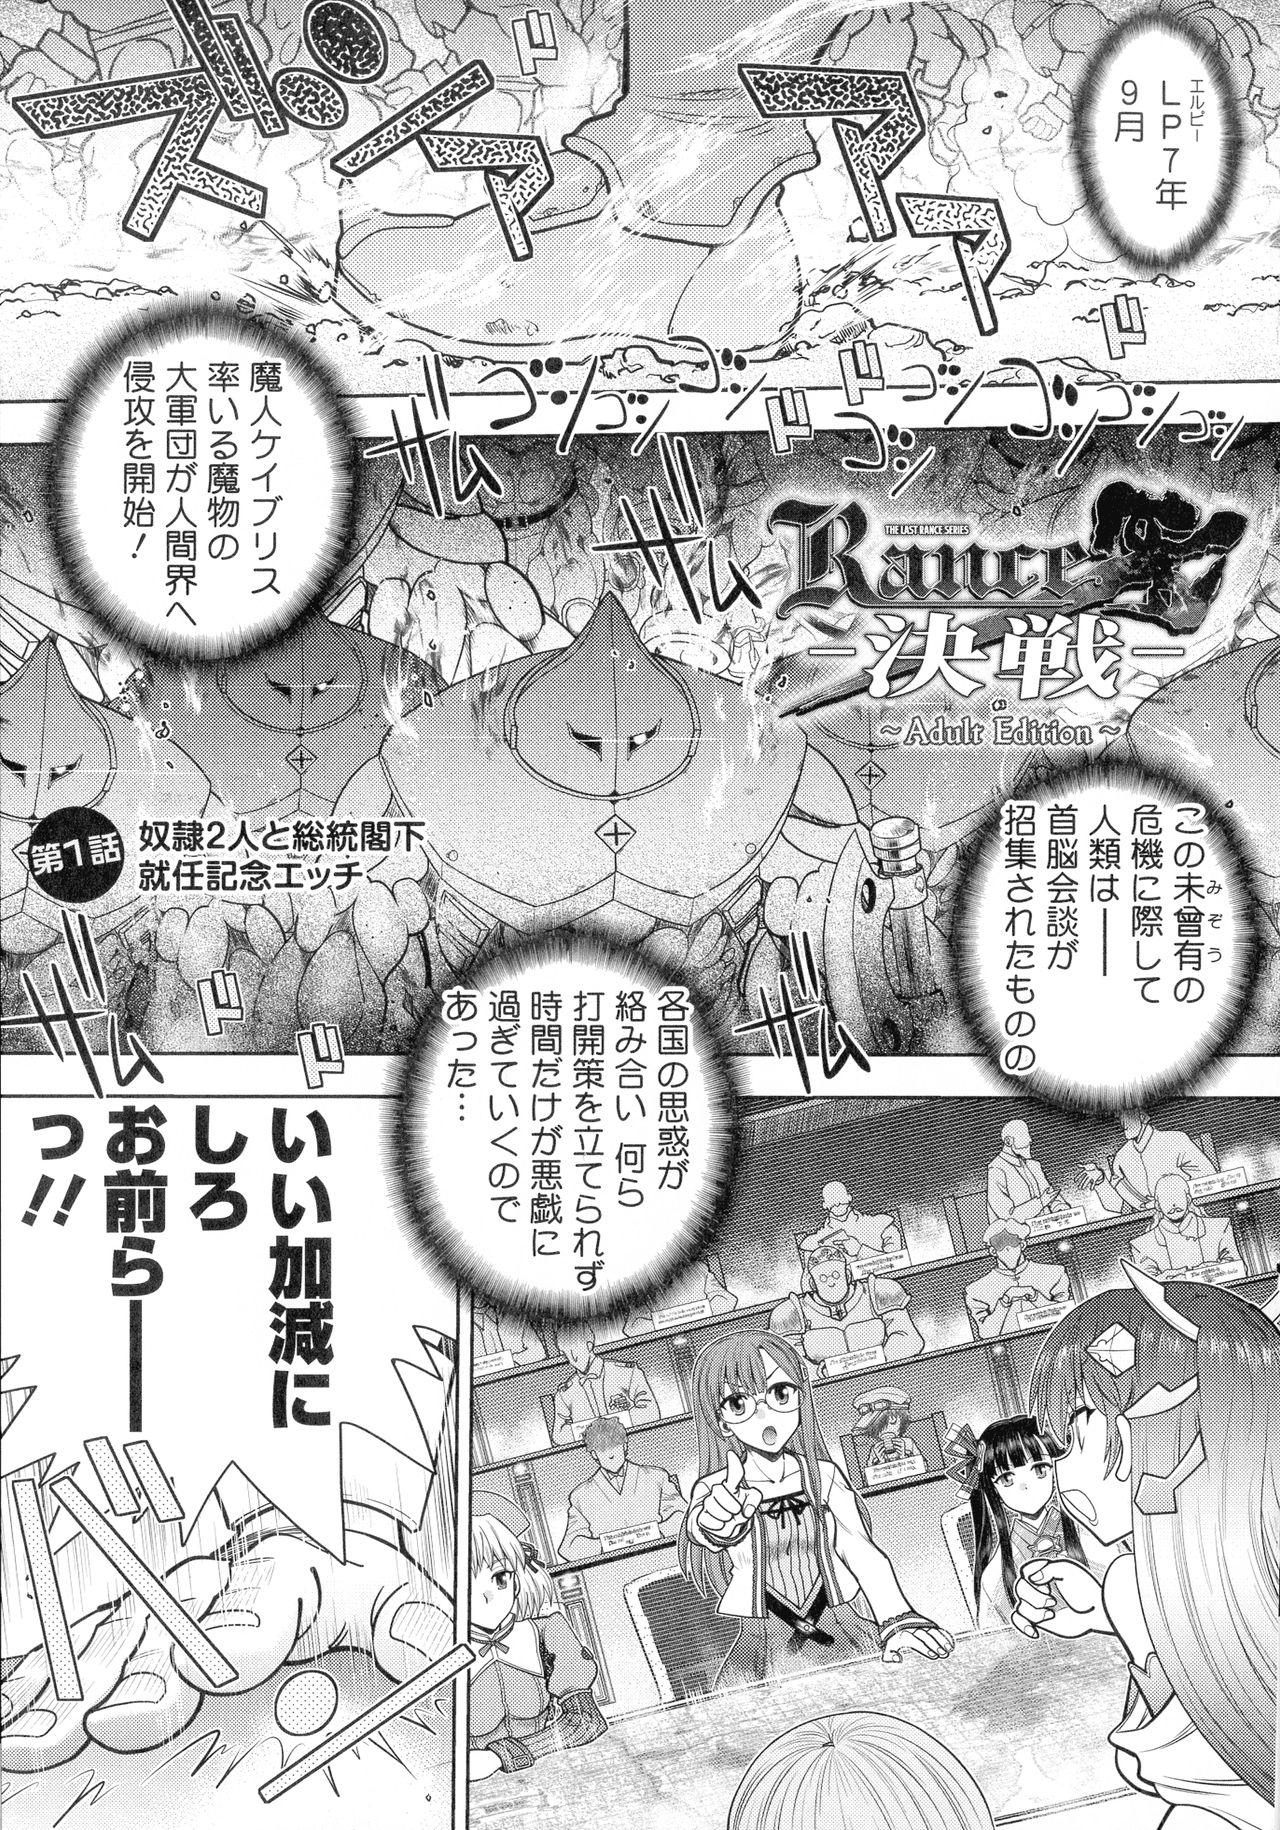 Rance 10 ～Adult Edition～ 4